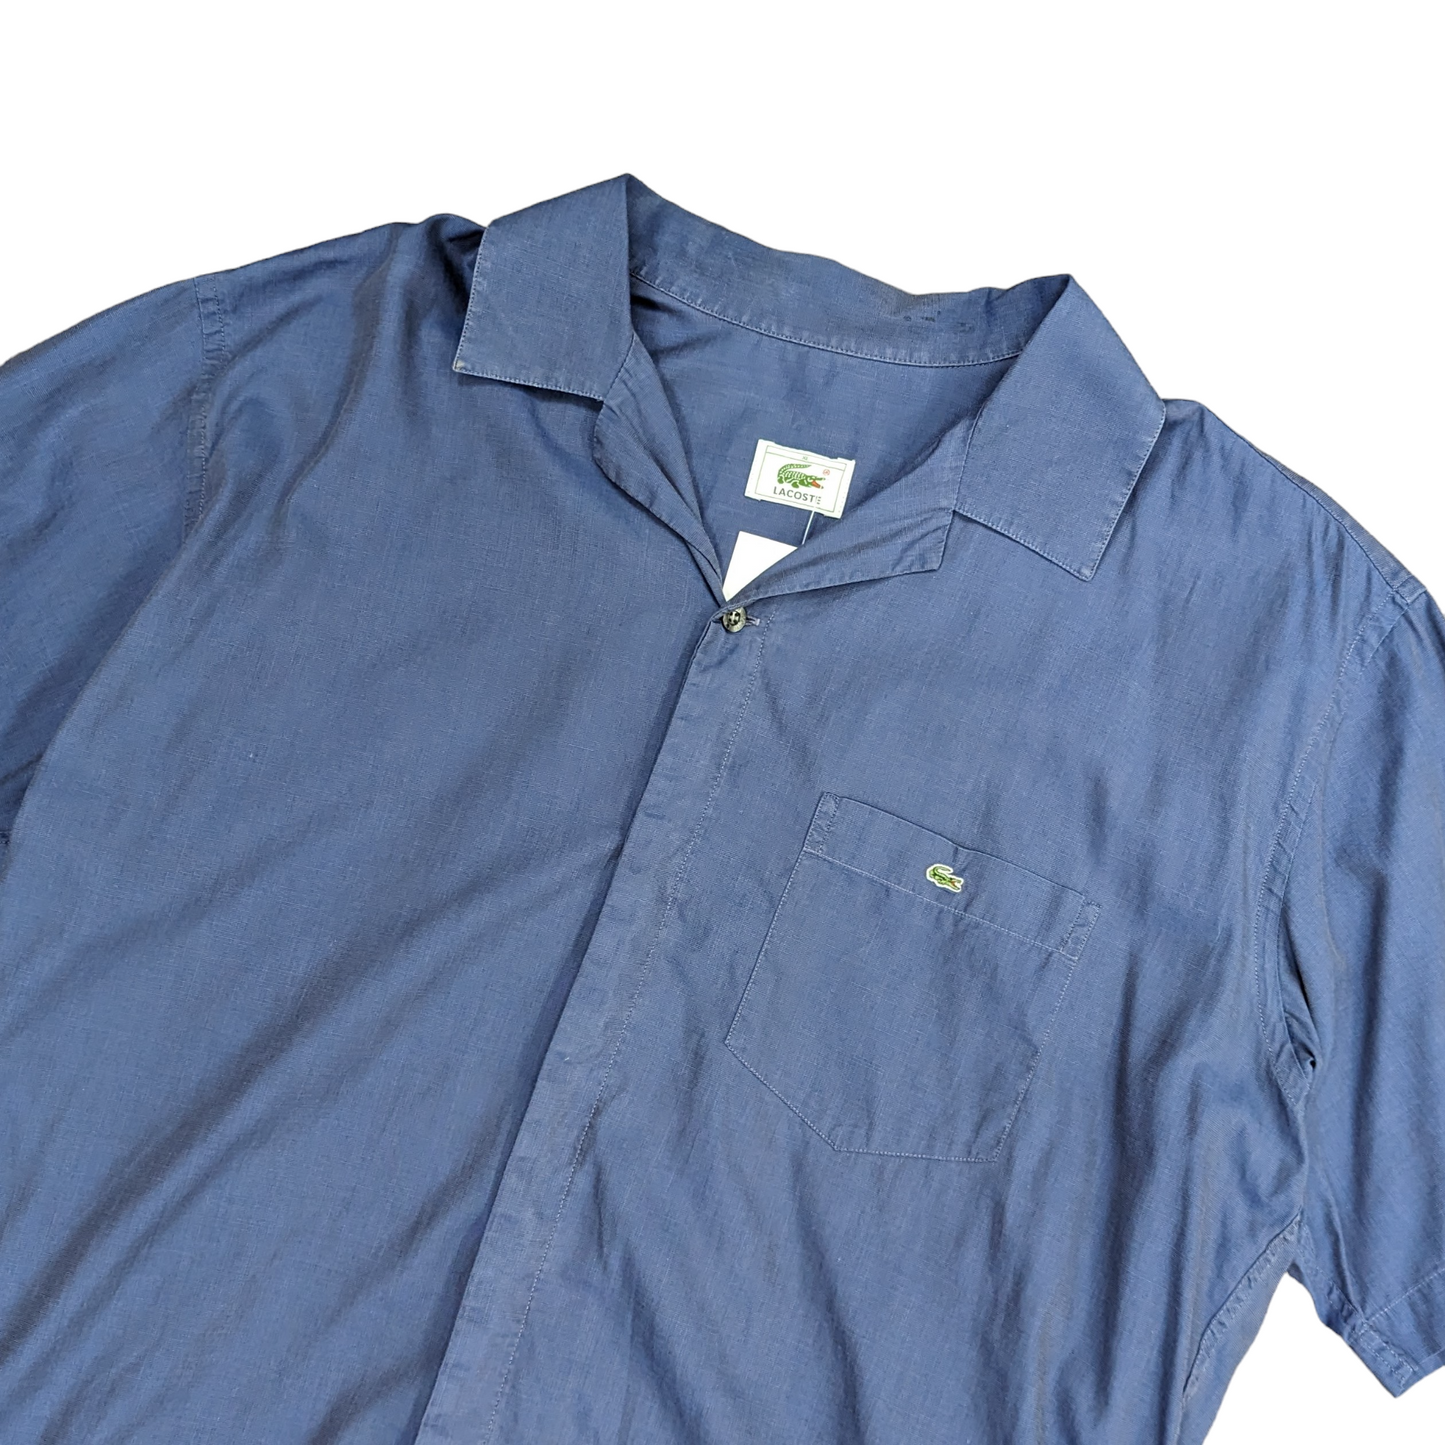 90s Lacoste S/S Shirt Size XL